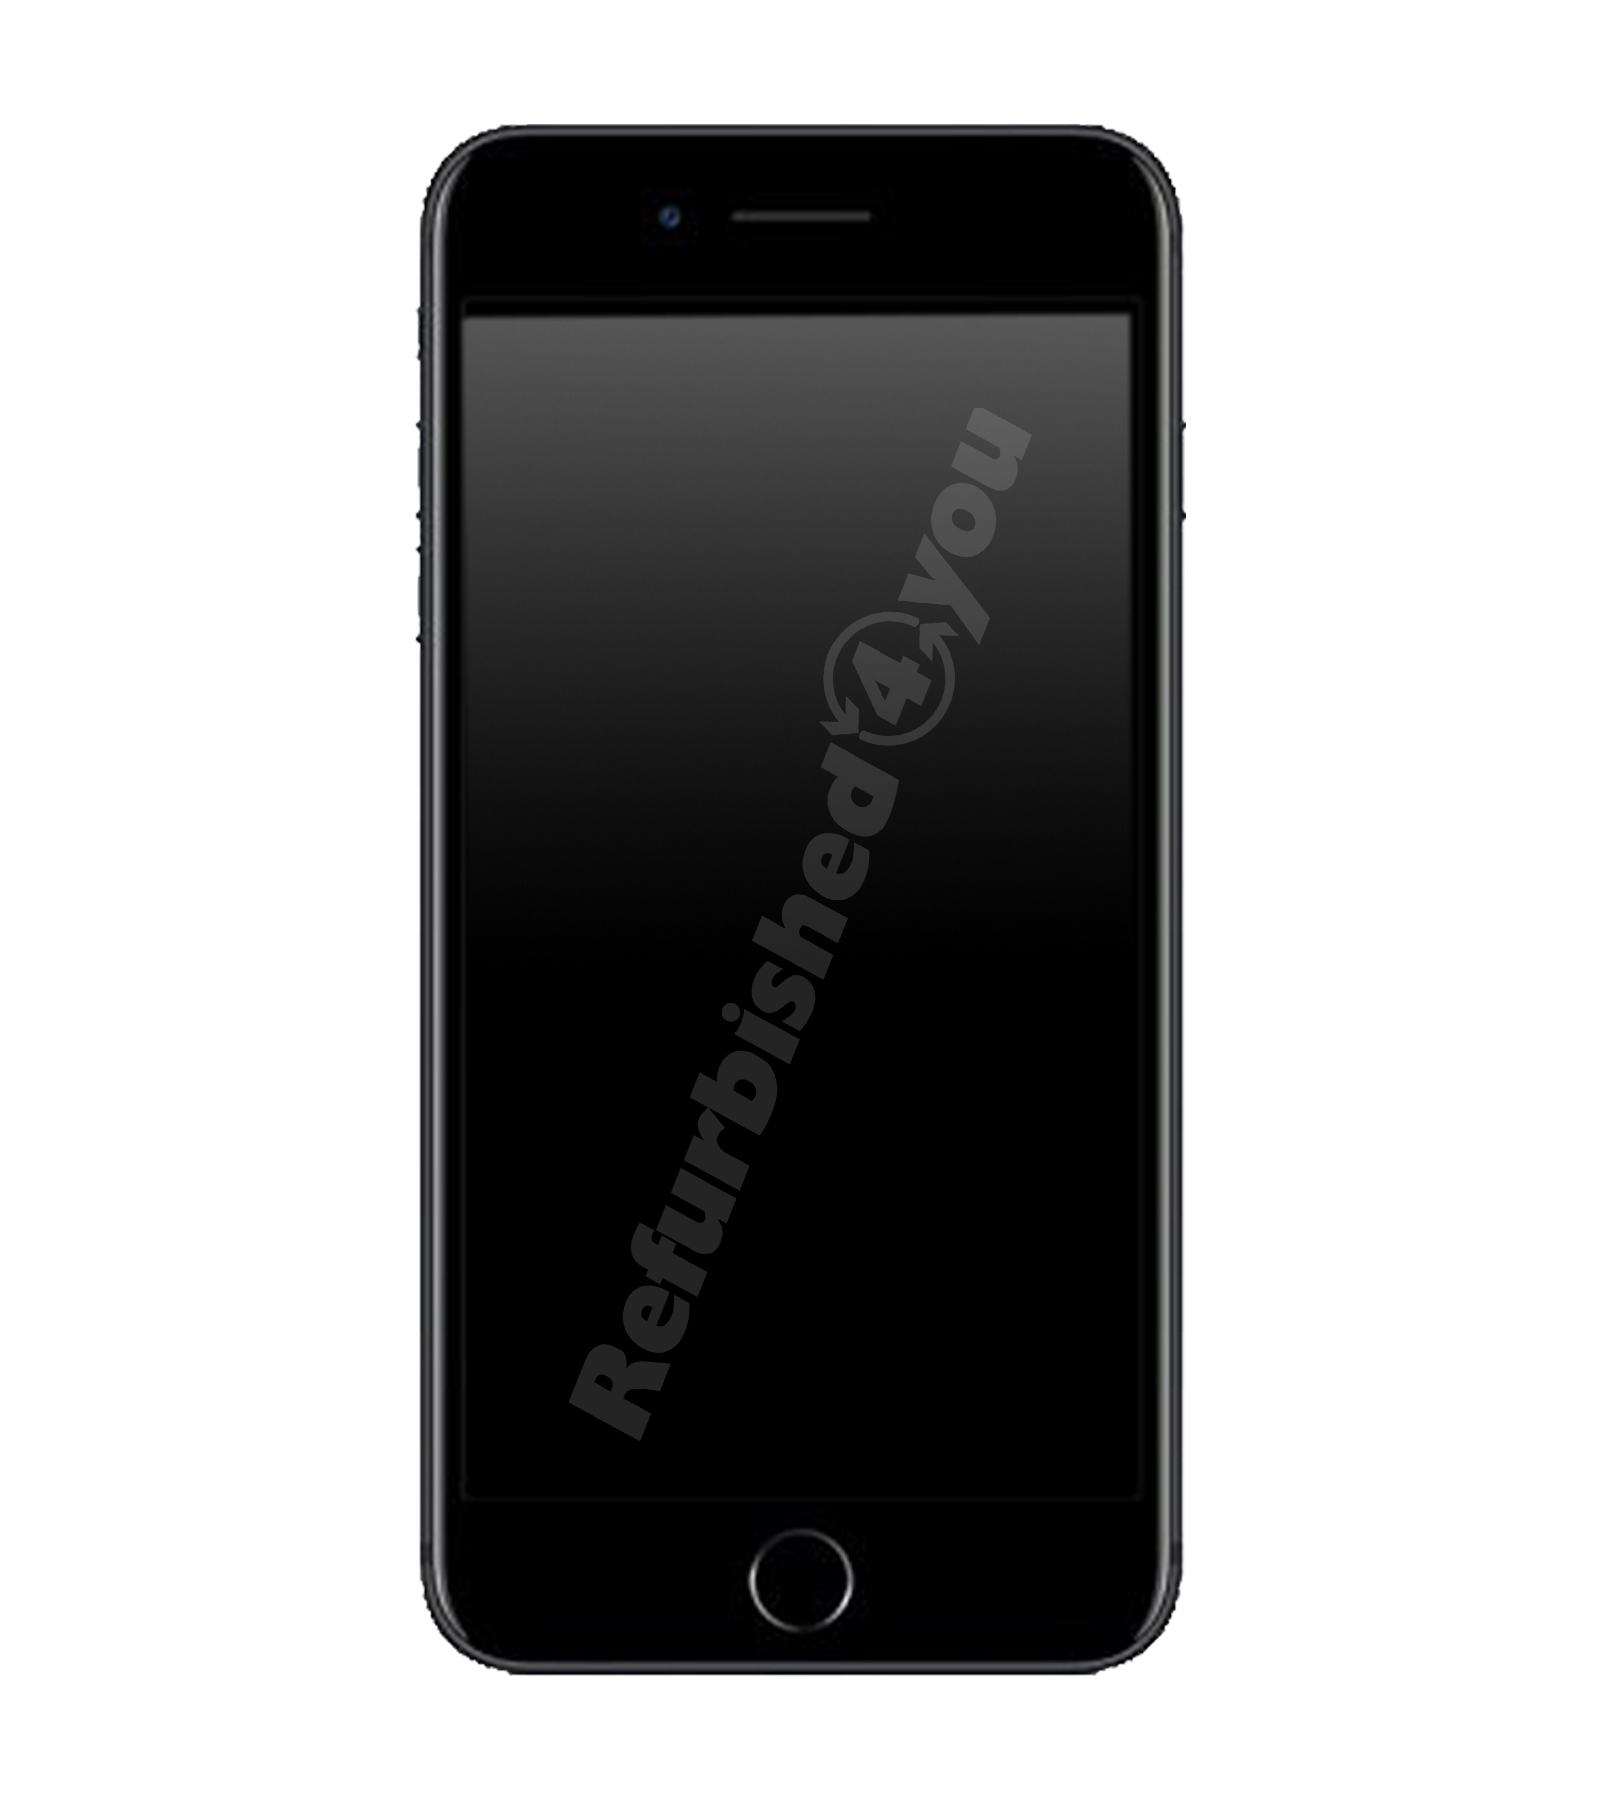 Apple iPhone 7 128GB A1778 (MN922ZD/A) - space grey - ohne SimLock iOS 